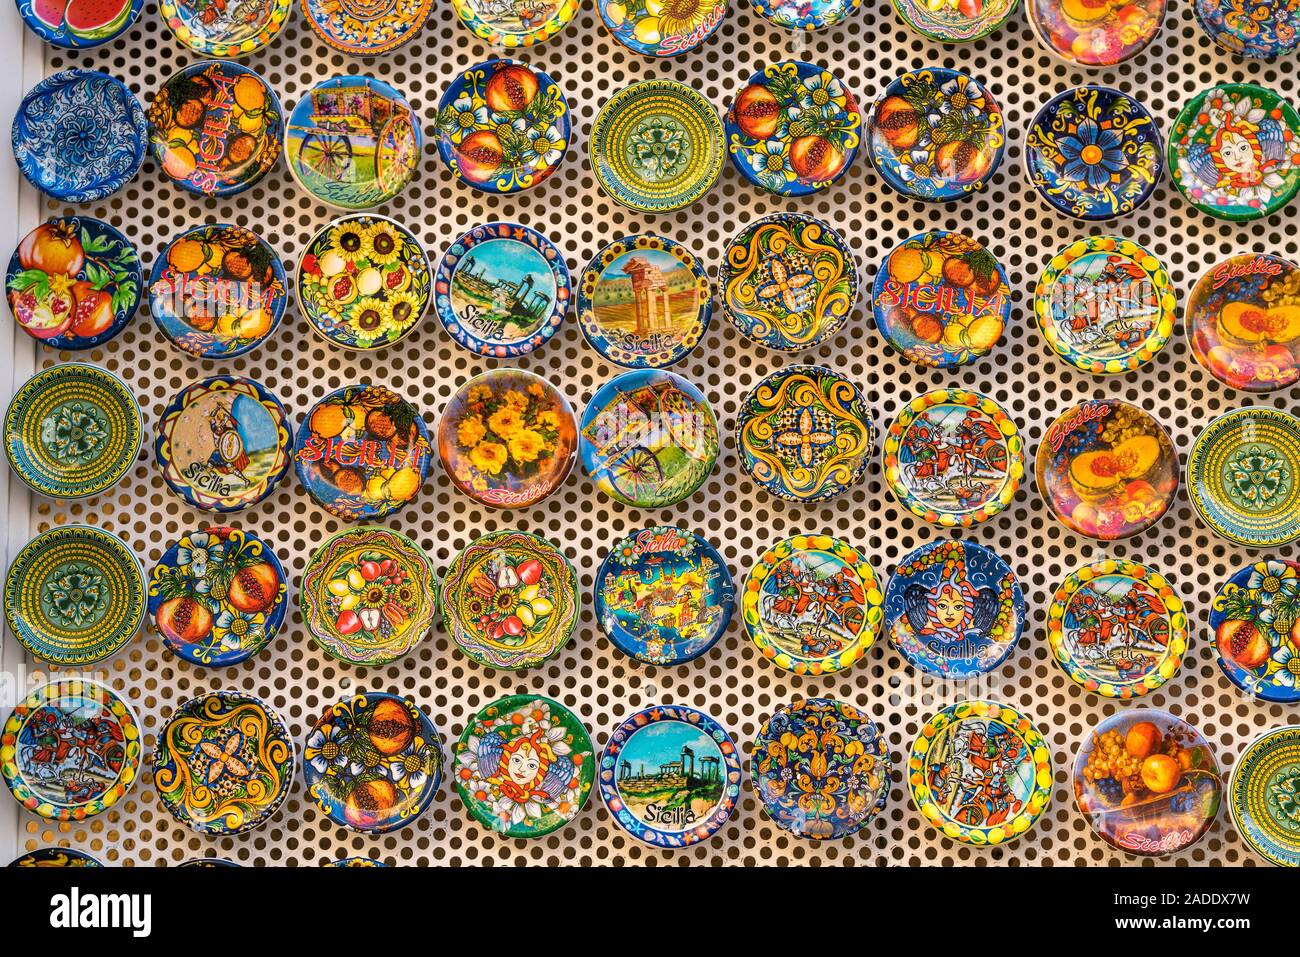 Bunte Keramik Teller als Souvenir, Noto, Sizilien, Italien, Europa  |  colourful ceramic plates as souvenirs, Noto, Sicily, Italy, Europe Stock Photo